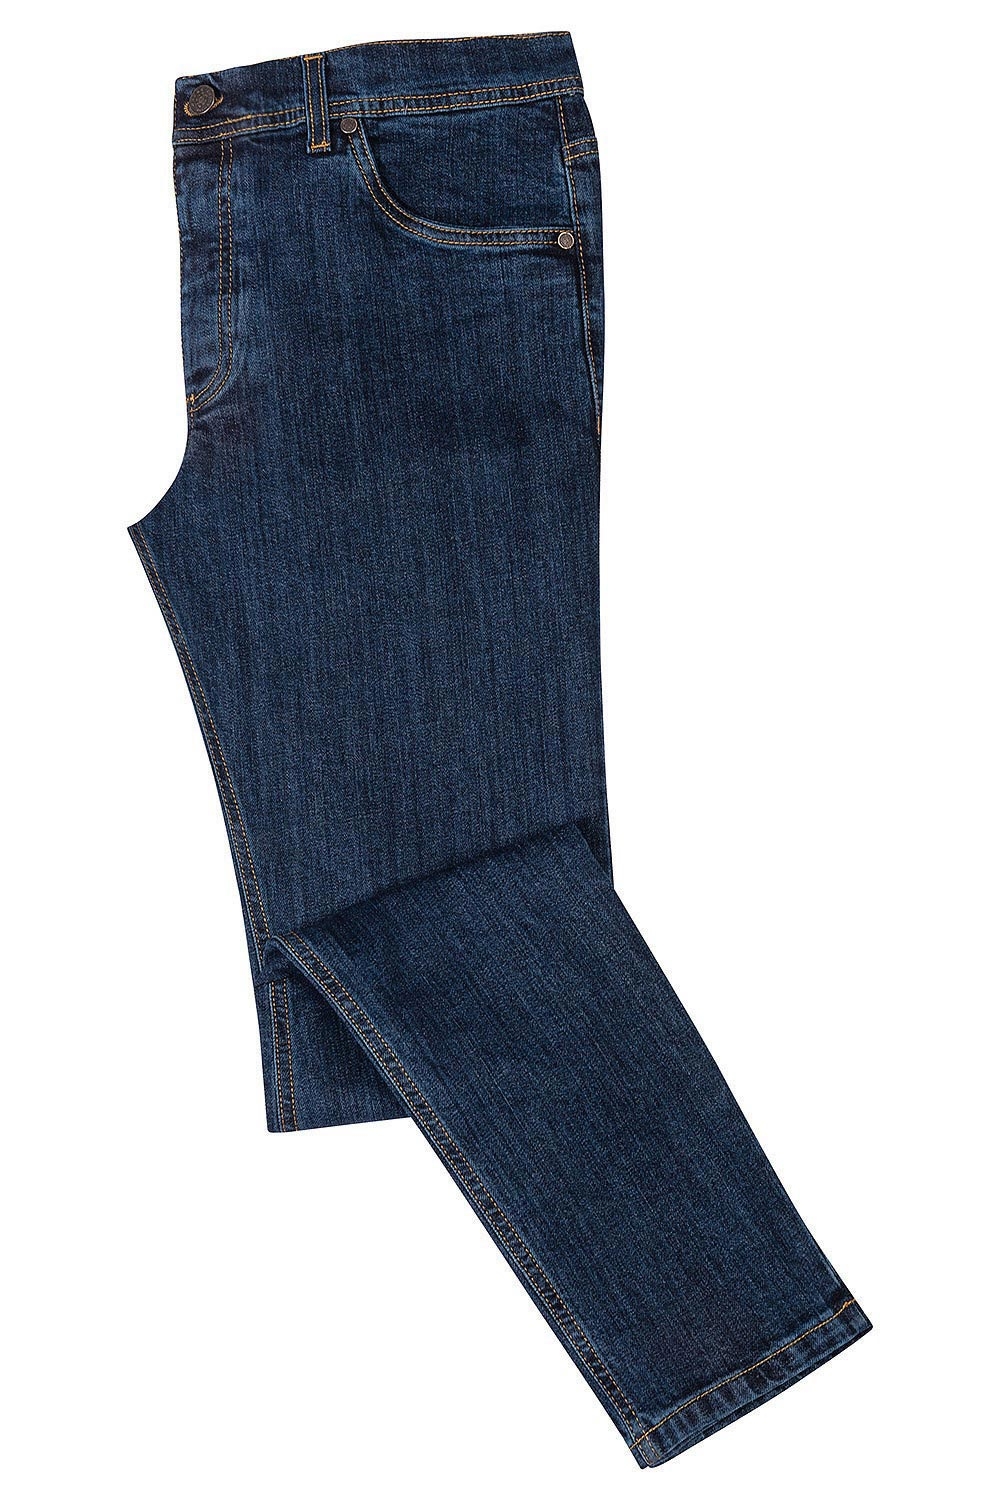 Blue jeans 1